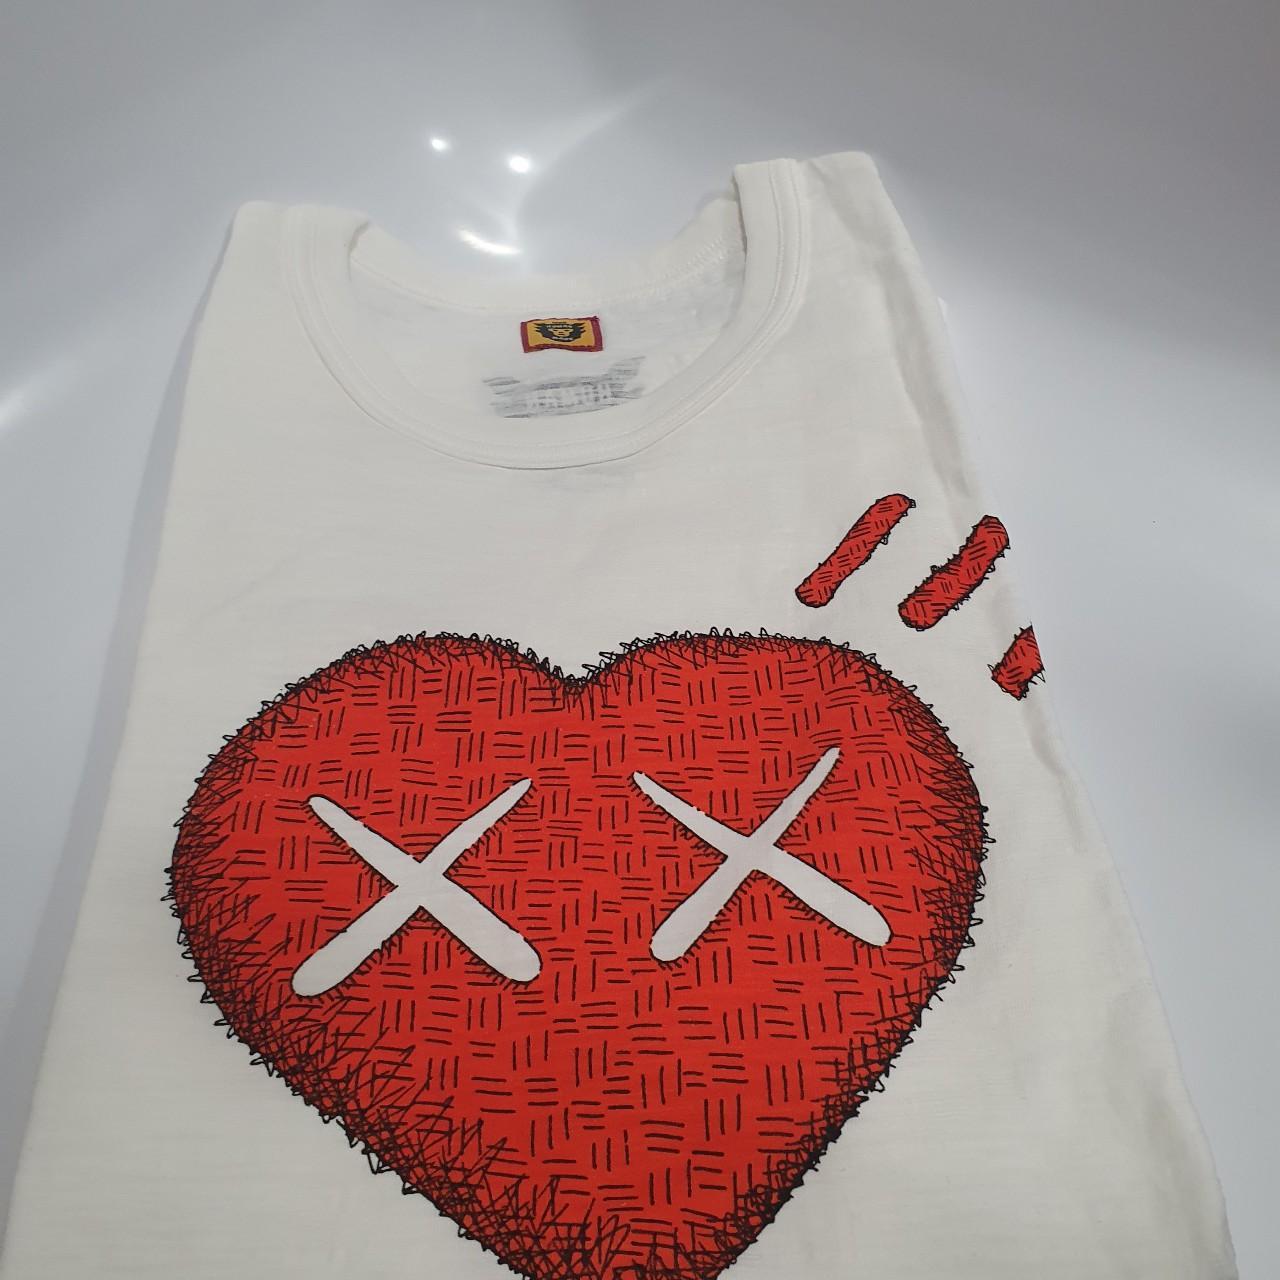 KAWS x HUMAN MADE T-Shirt Release